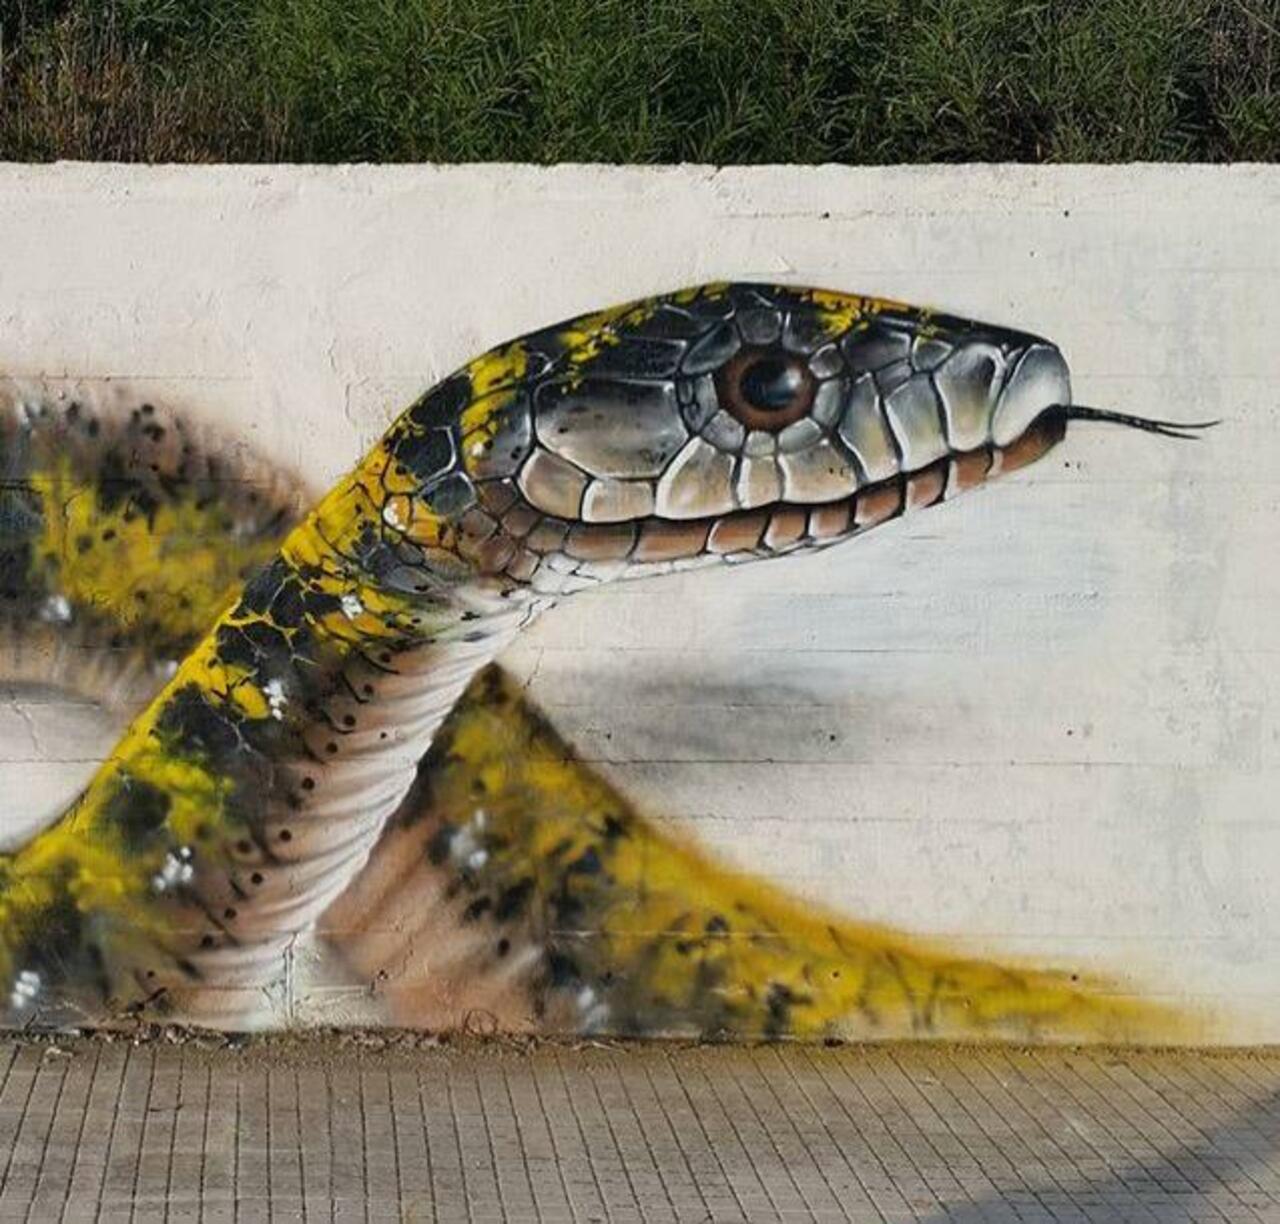 Street Art by Cosimocheone 

#art #graffiti #mural #streetart http://t.co/DT7ifiSWGH